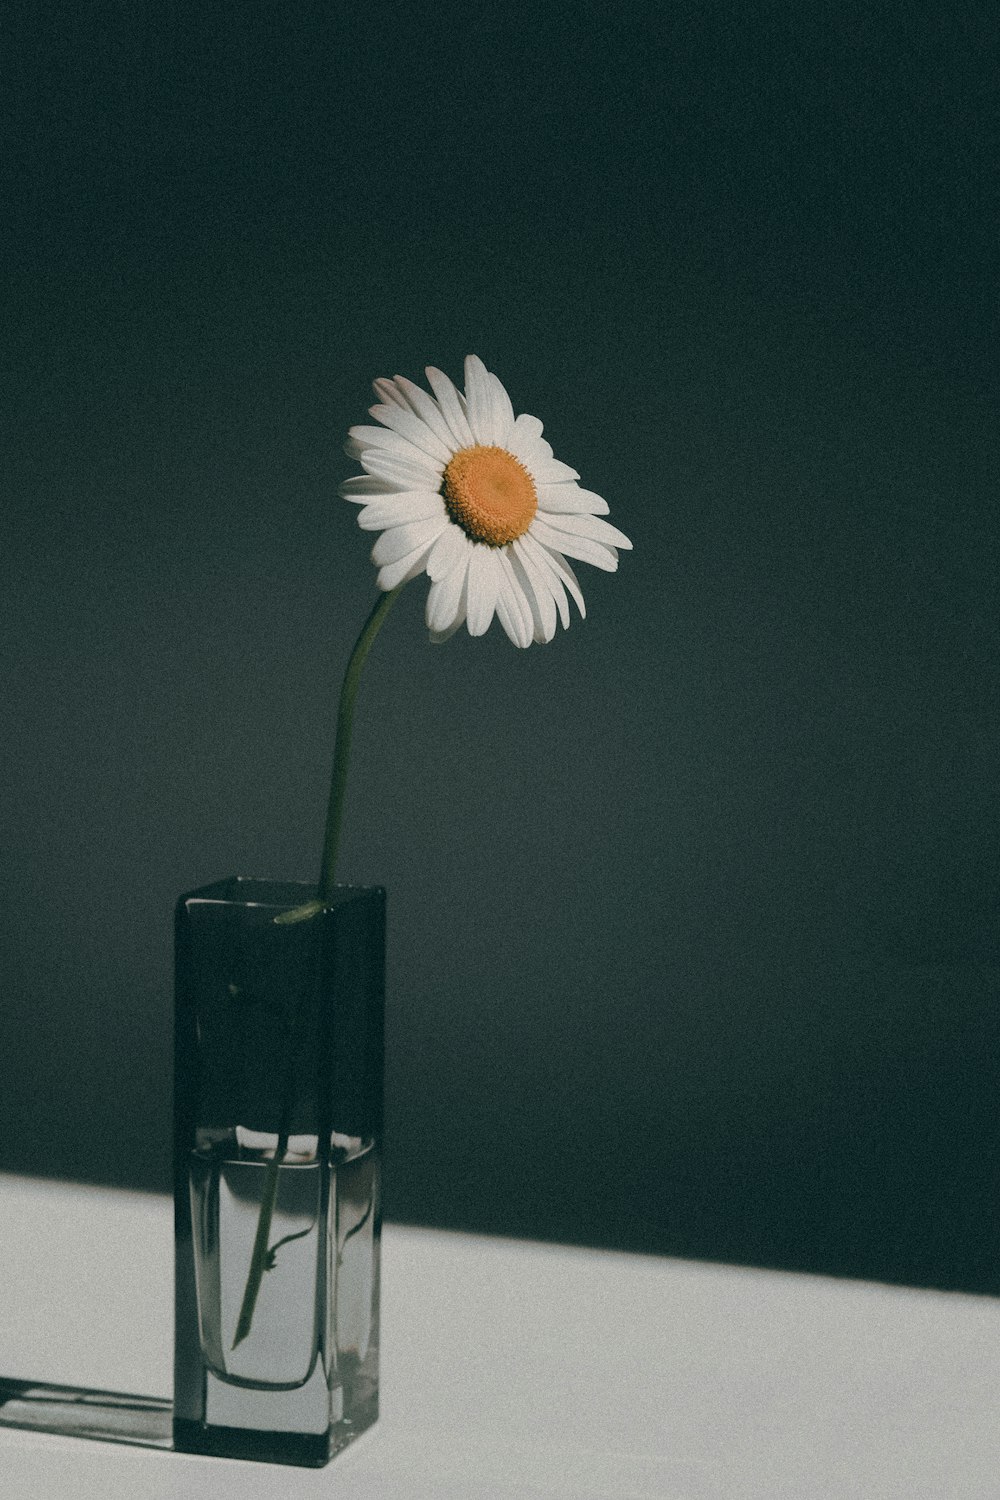 a single white flower in a black vase